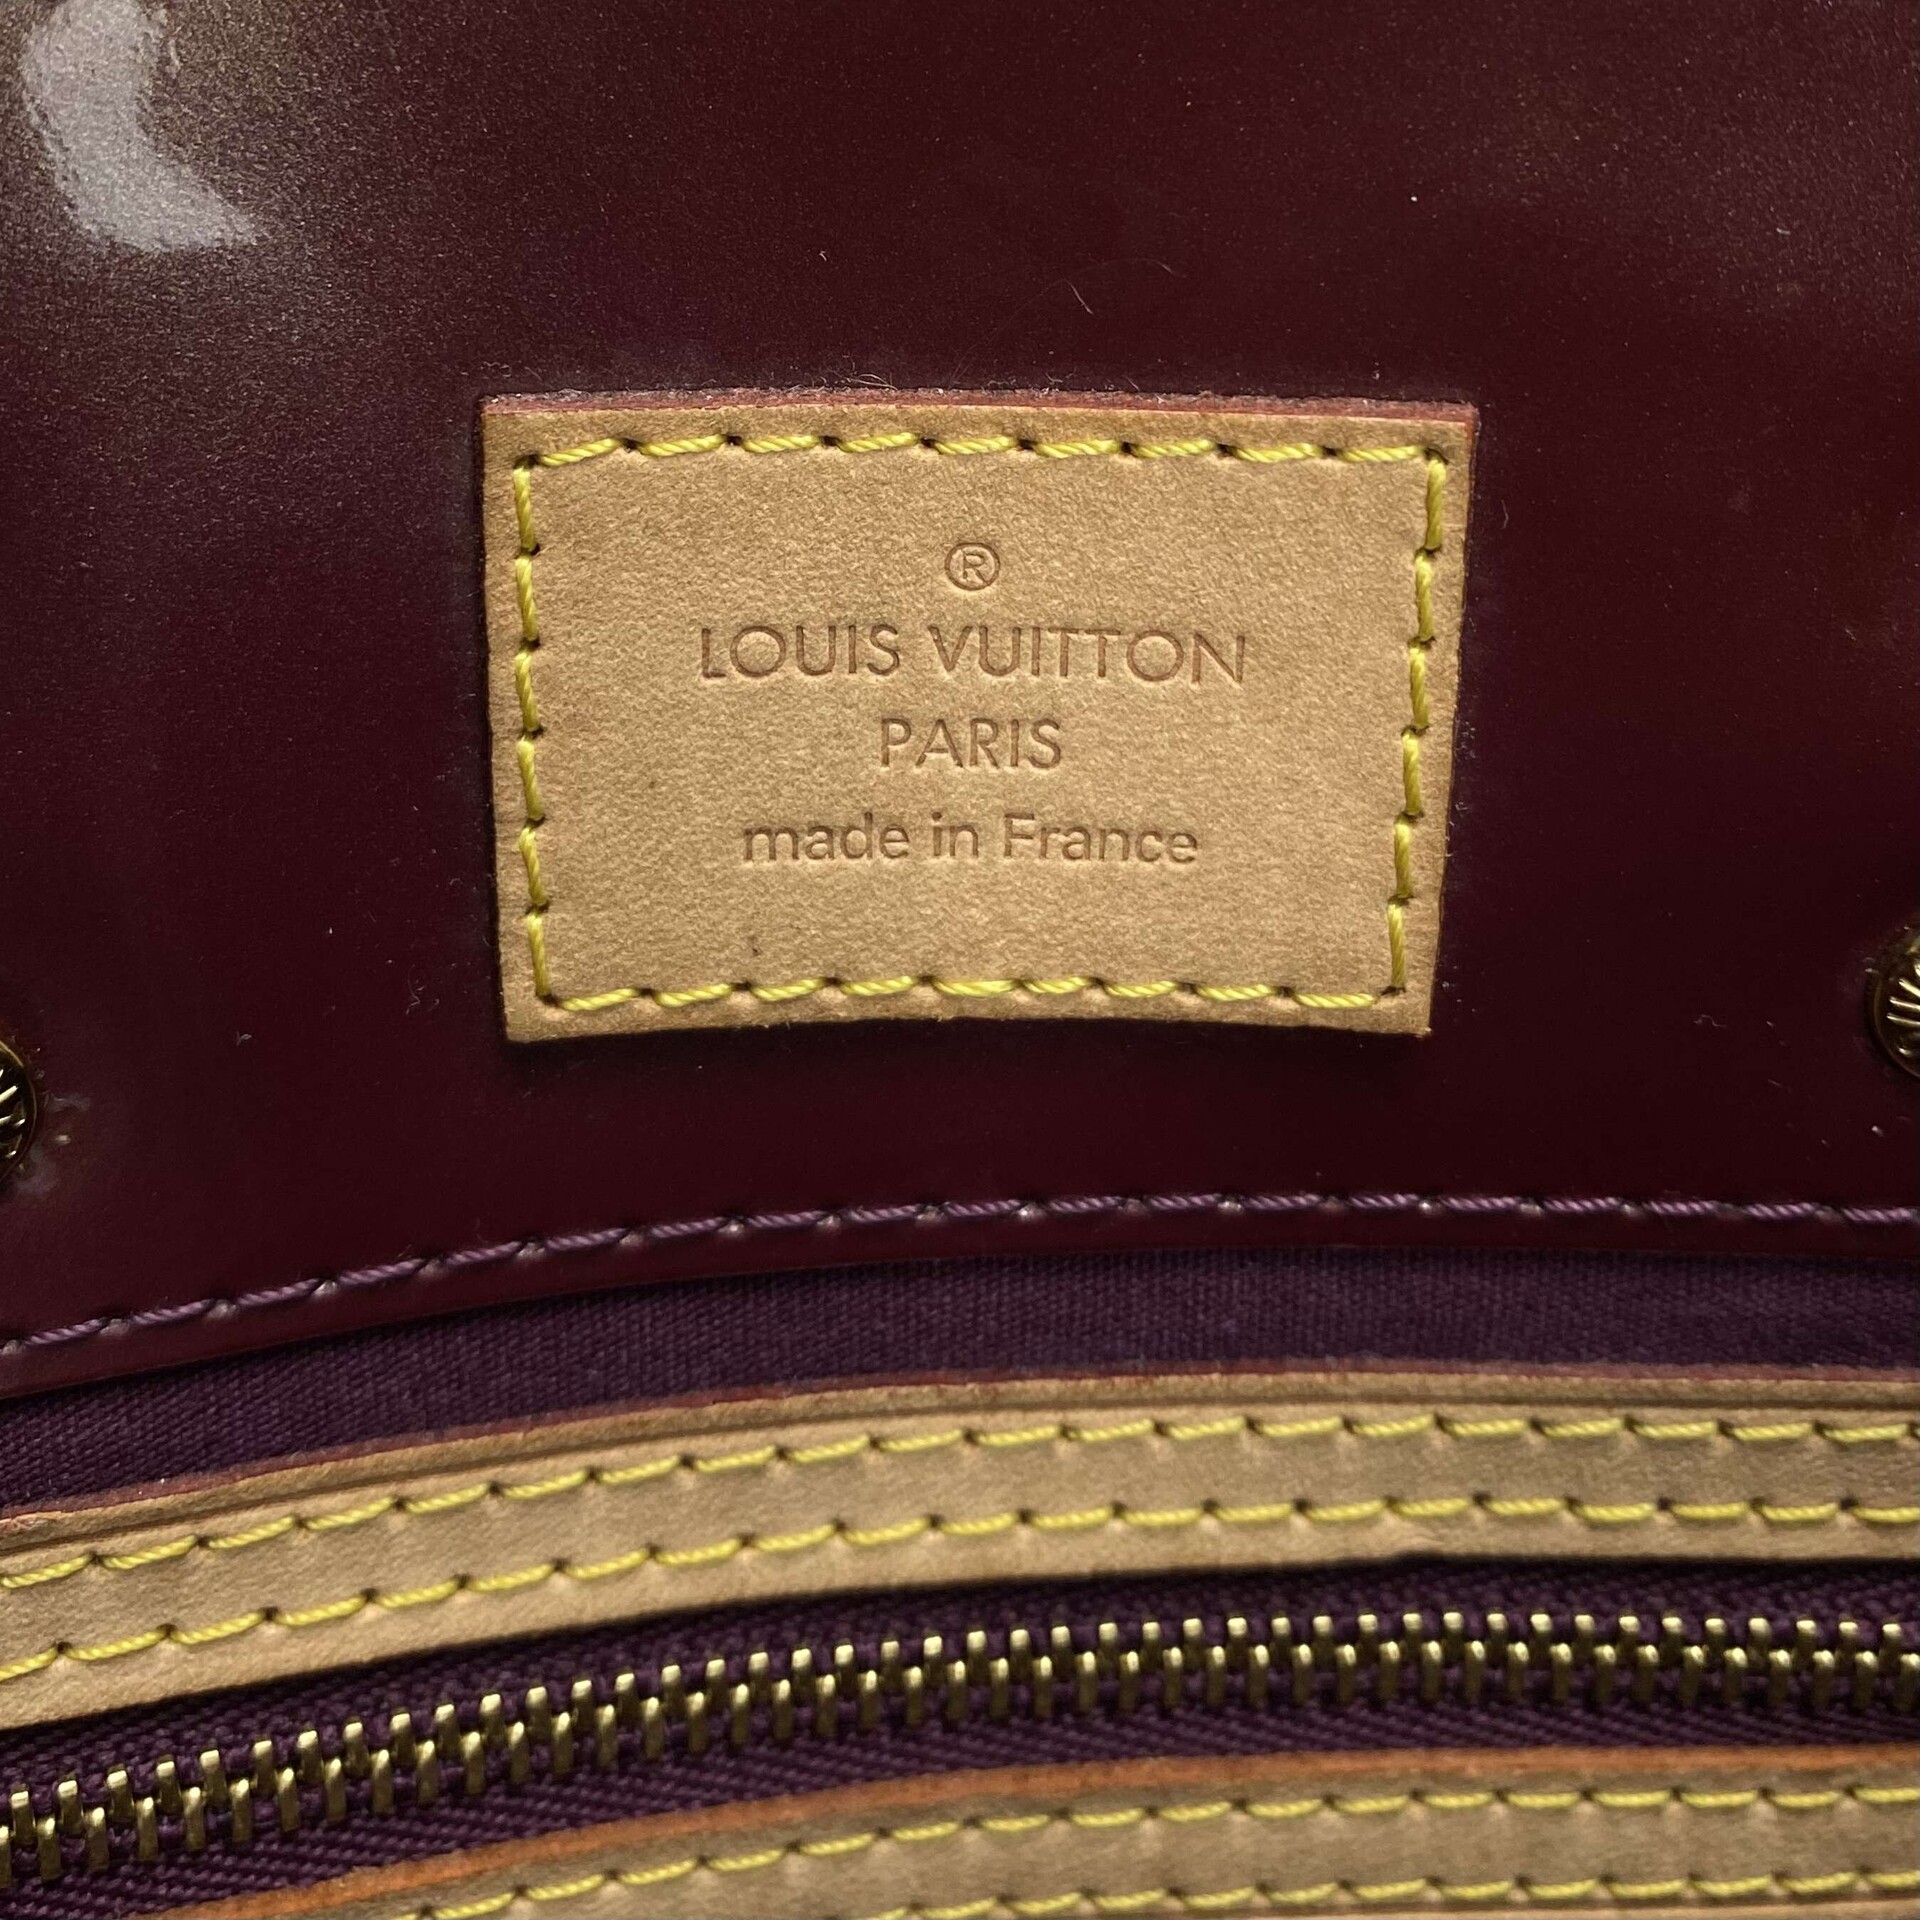 Bolsa Louis Vuitton Read PM Vinho